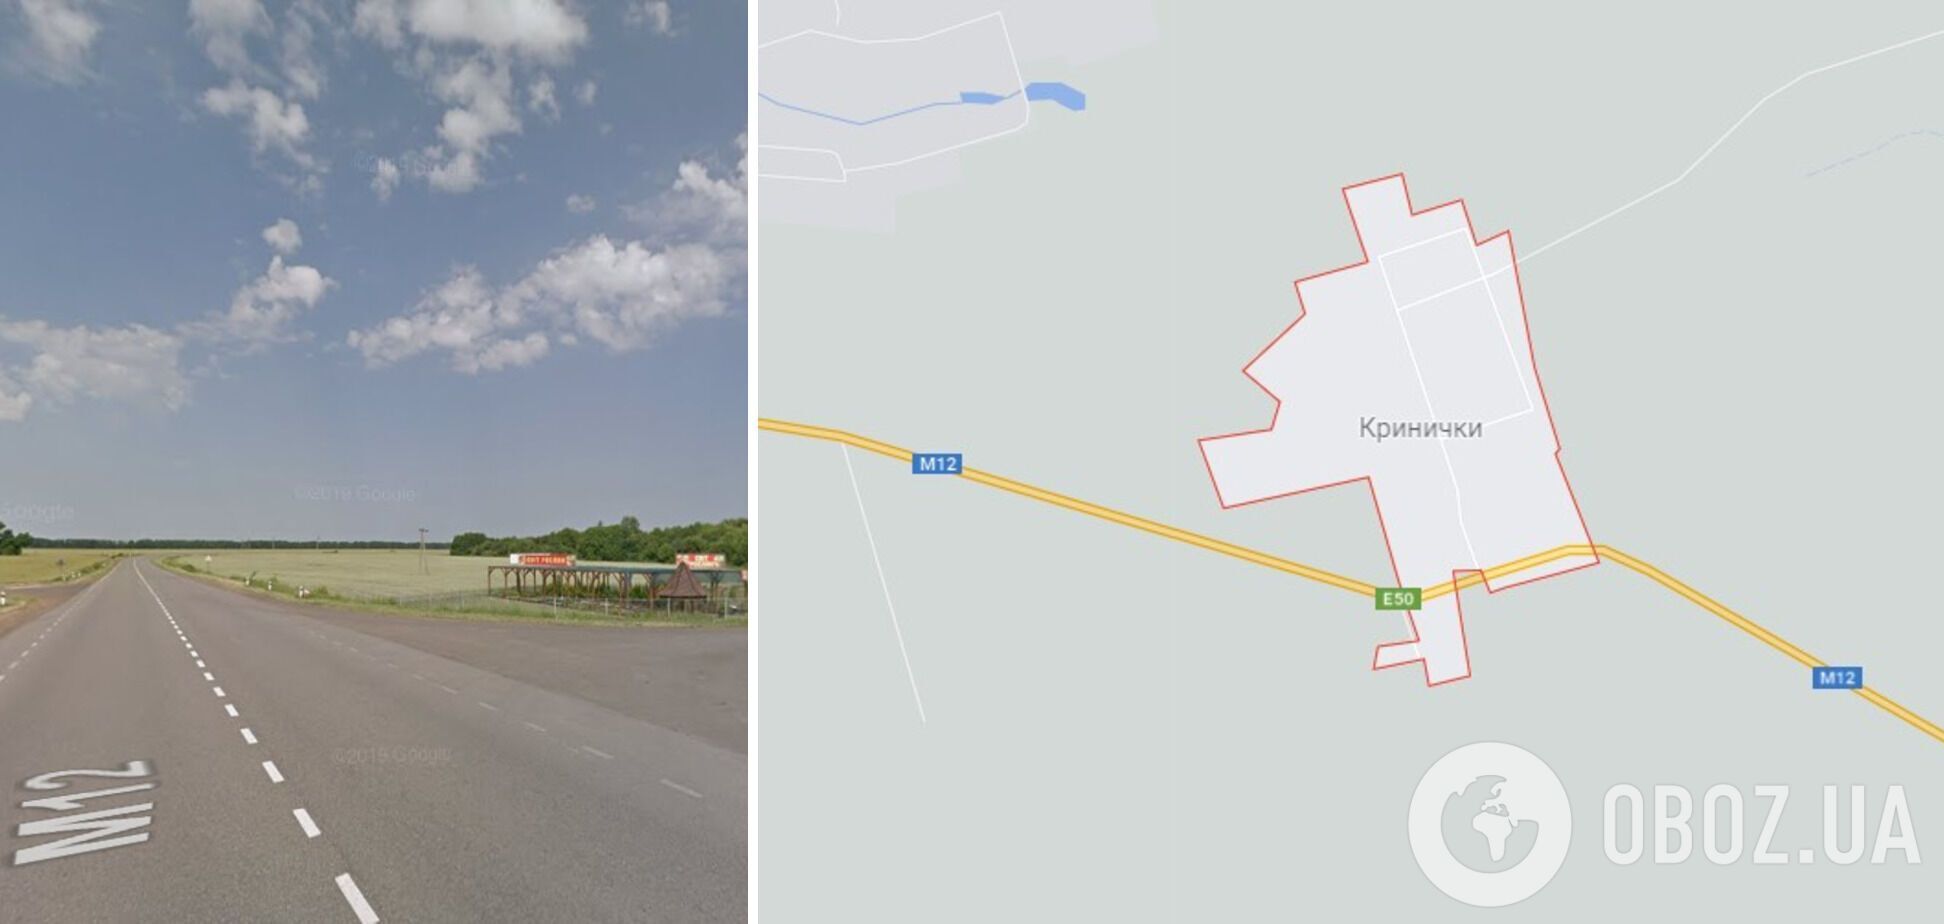 ДТП произошло возле села Кринички